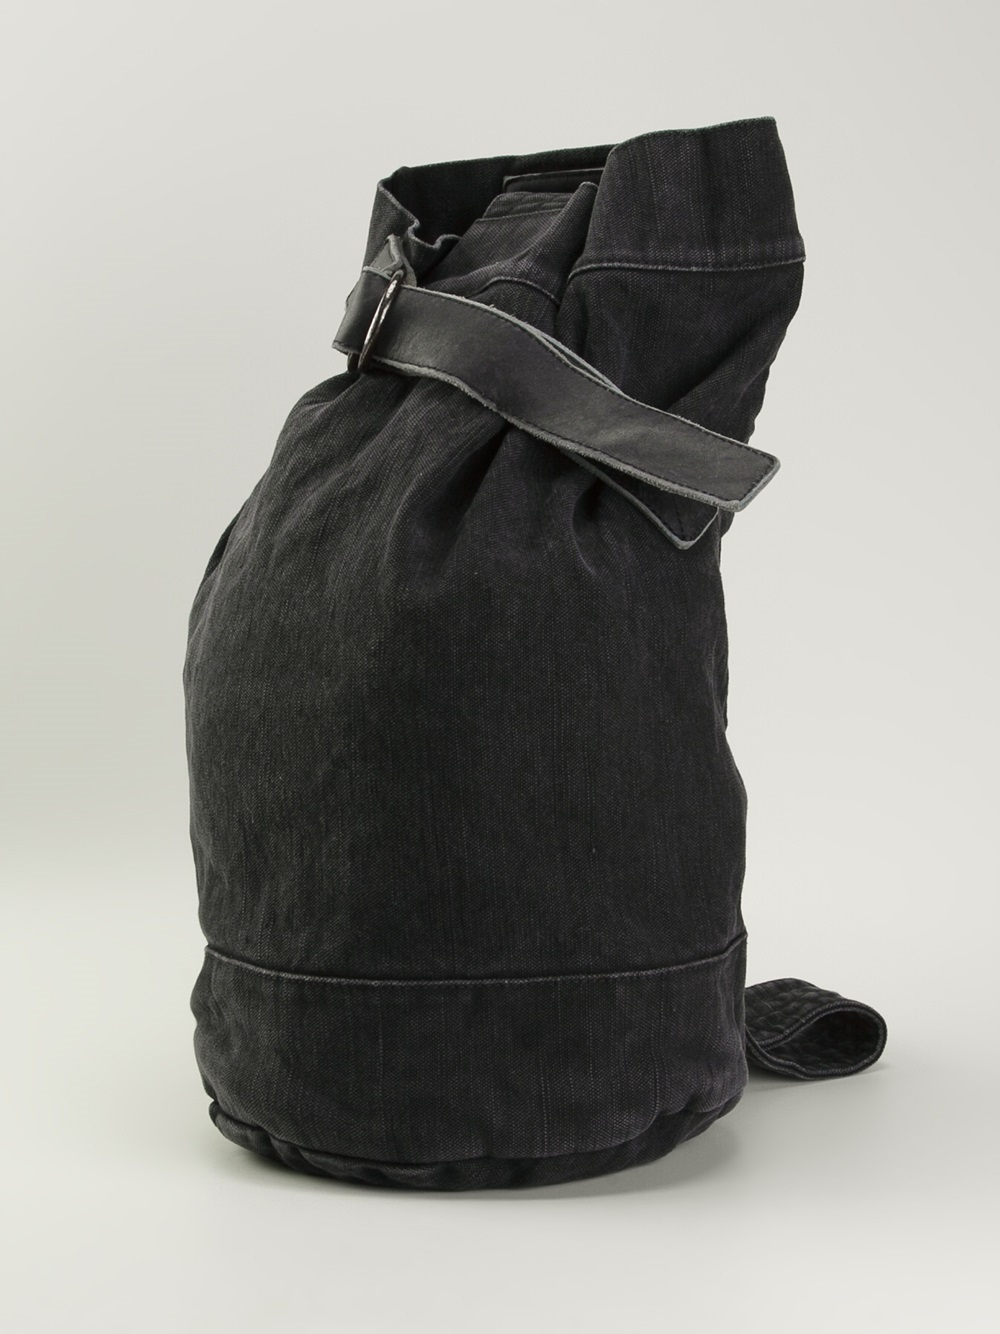 Lyst - Yohji yamamoto Single Strap Backpack in Black for Men